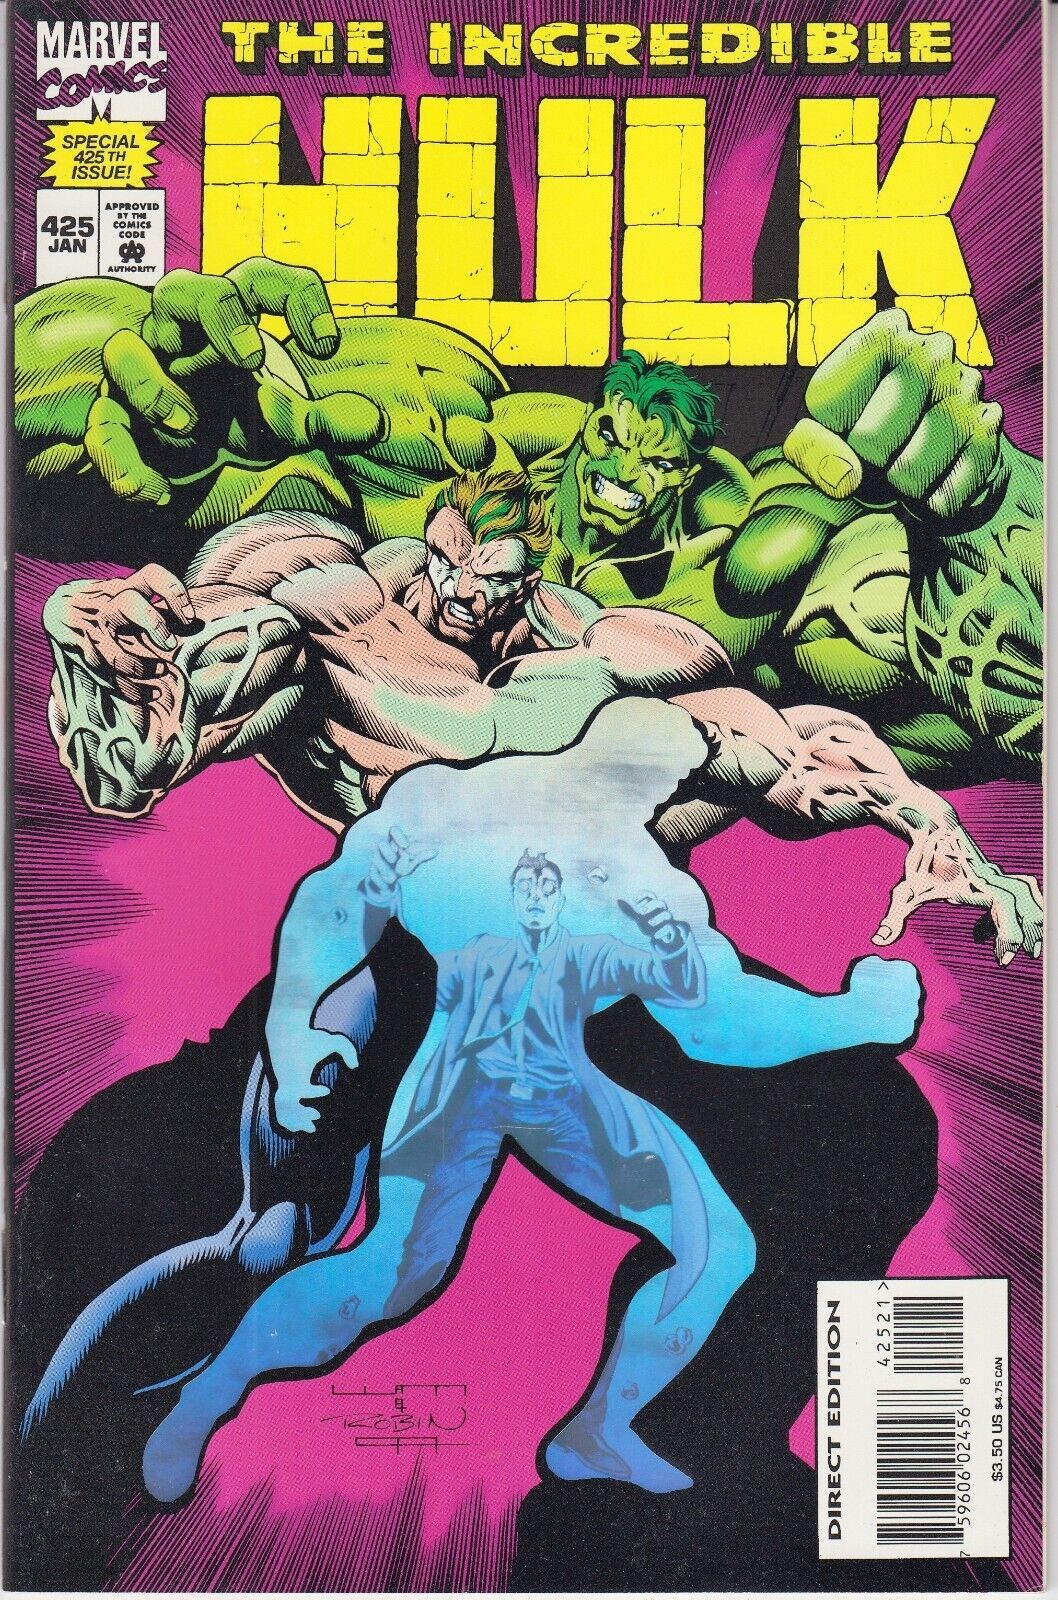 INCREDIBLE HULK #425 (January 1995) Marvel Comics -Hologram Cover- Liam Sharp VF - $8.99